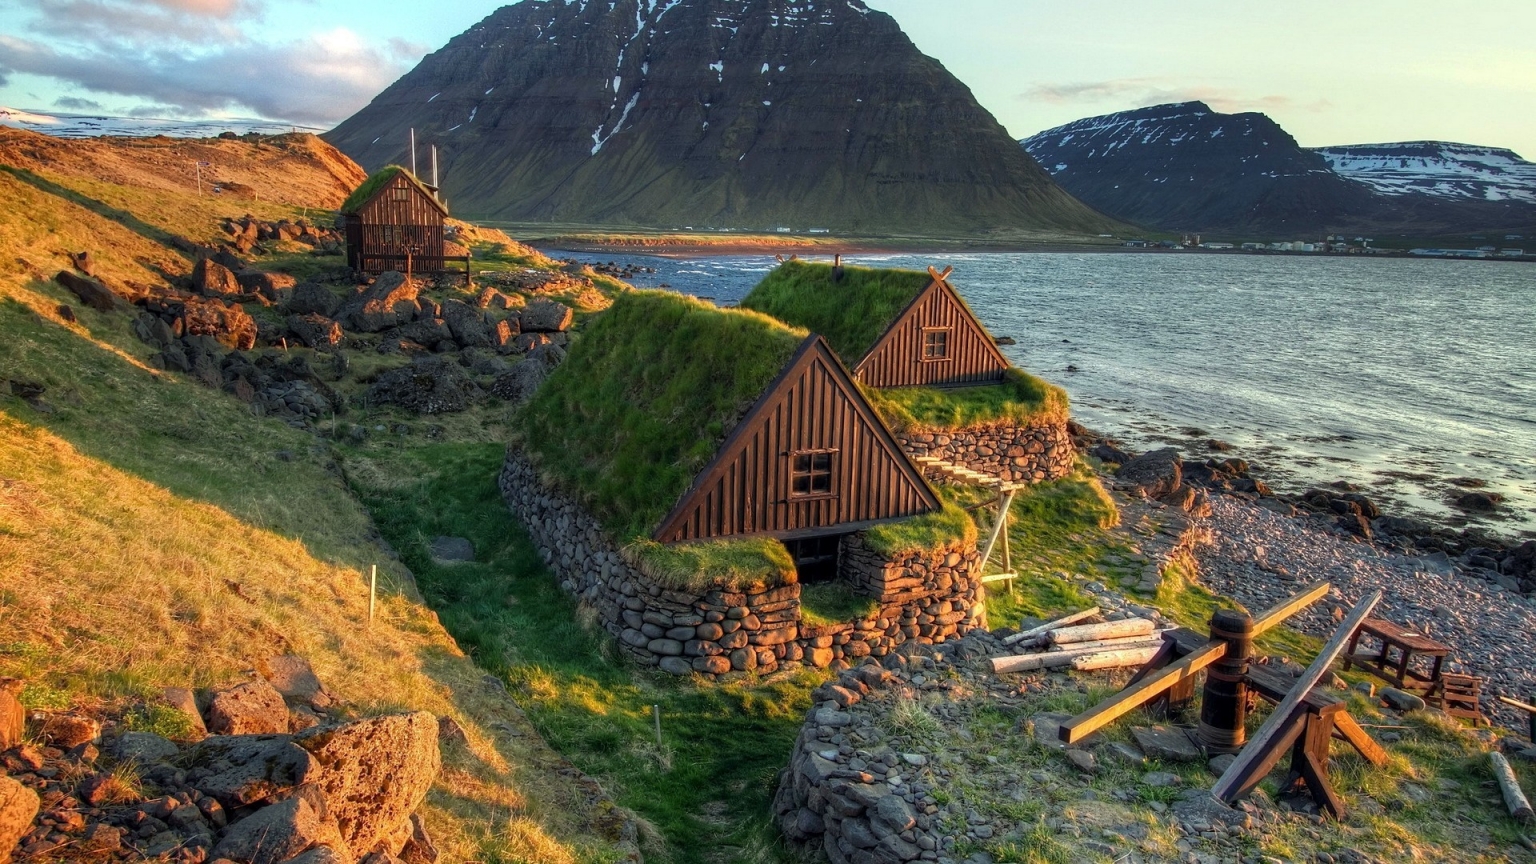 Iceland Lake Landscape for 1536 x 864 HDTV resolution